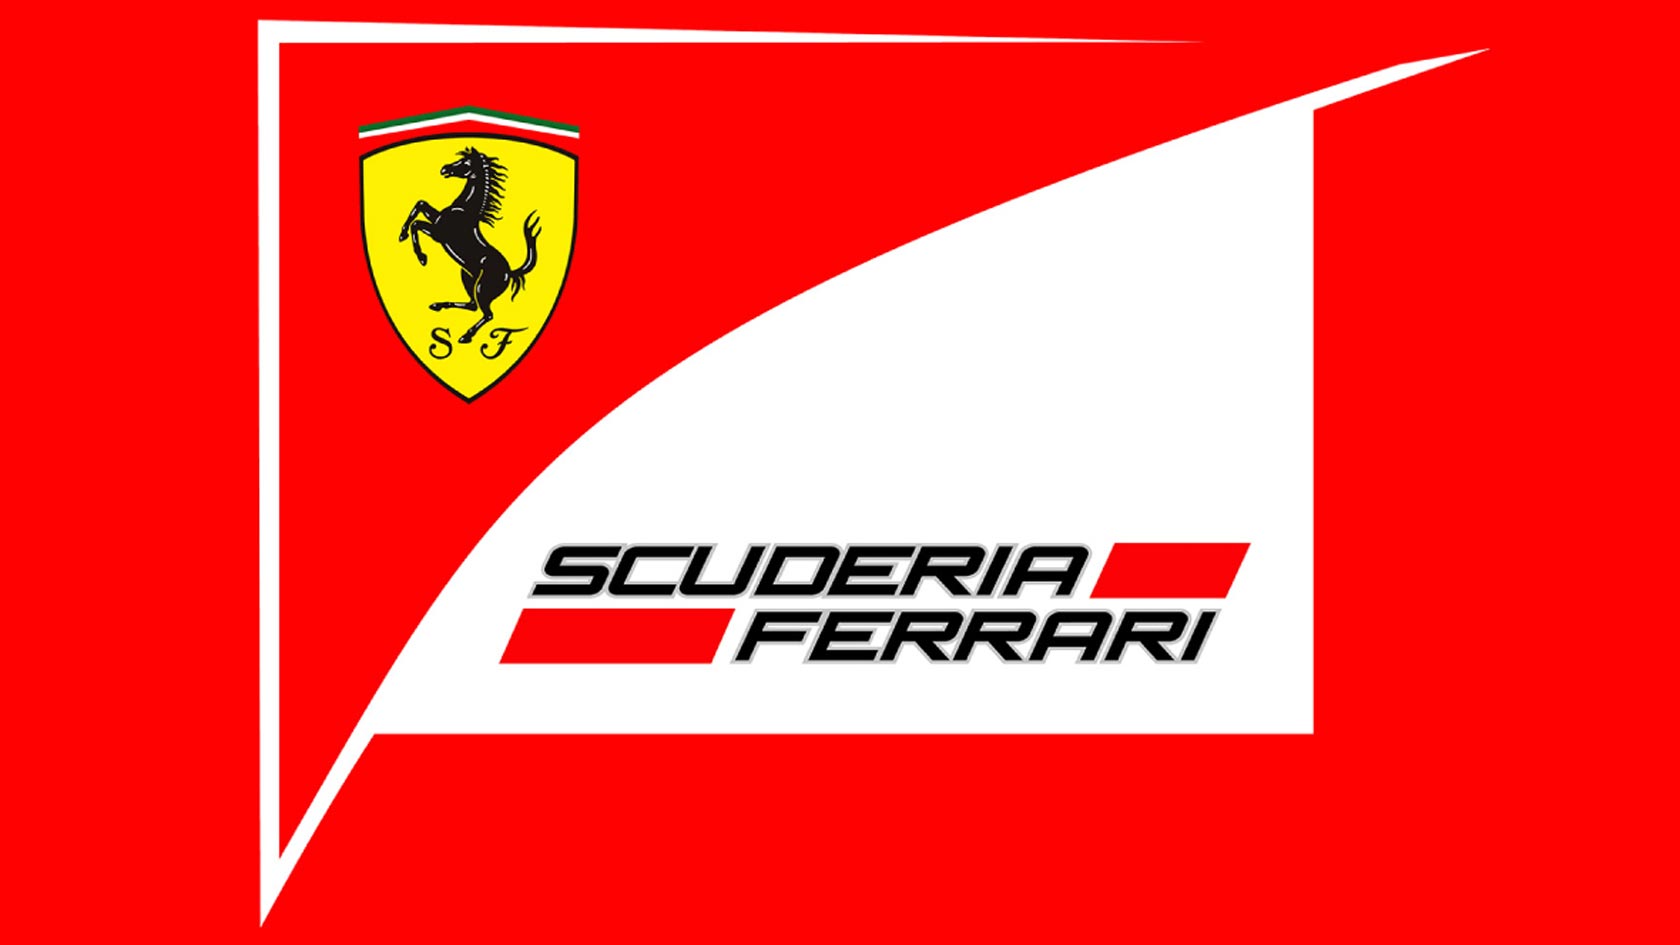 Ferrari set to unveil 2013 F1 title challenger in February - Team VVV